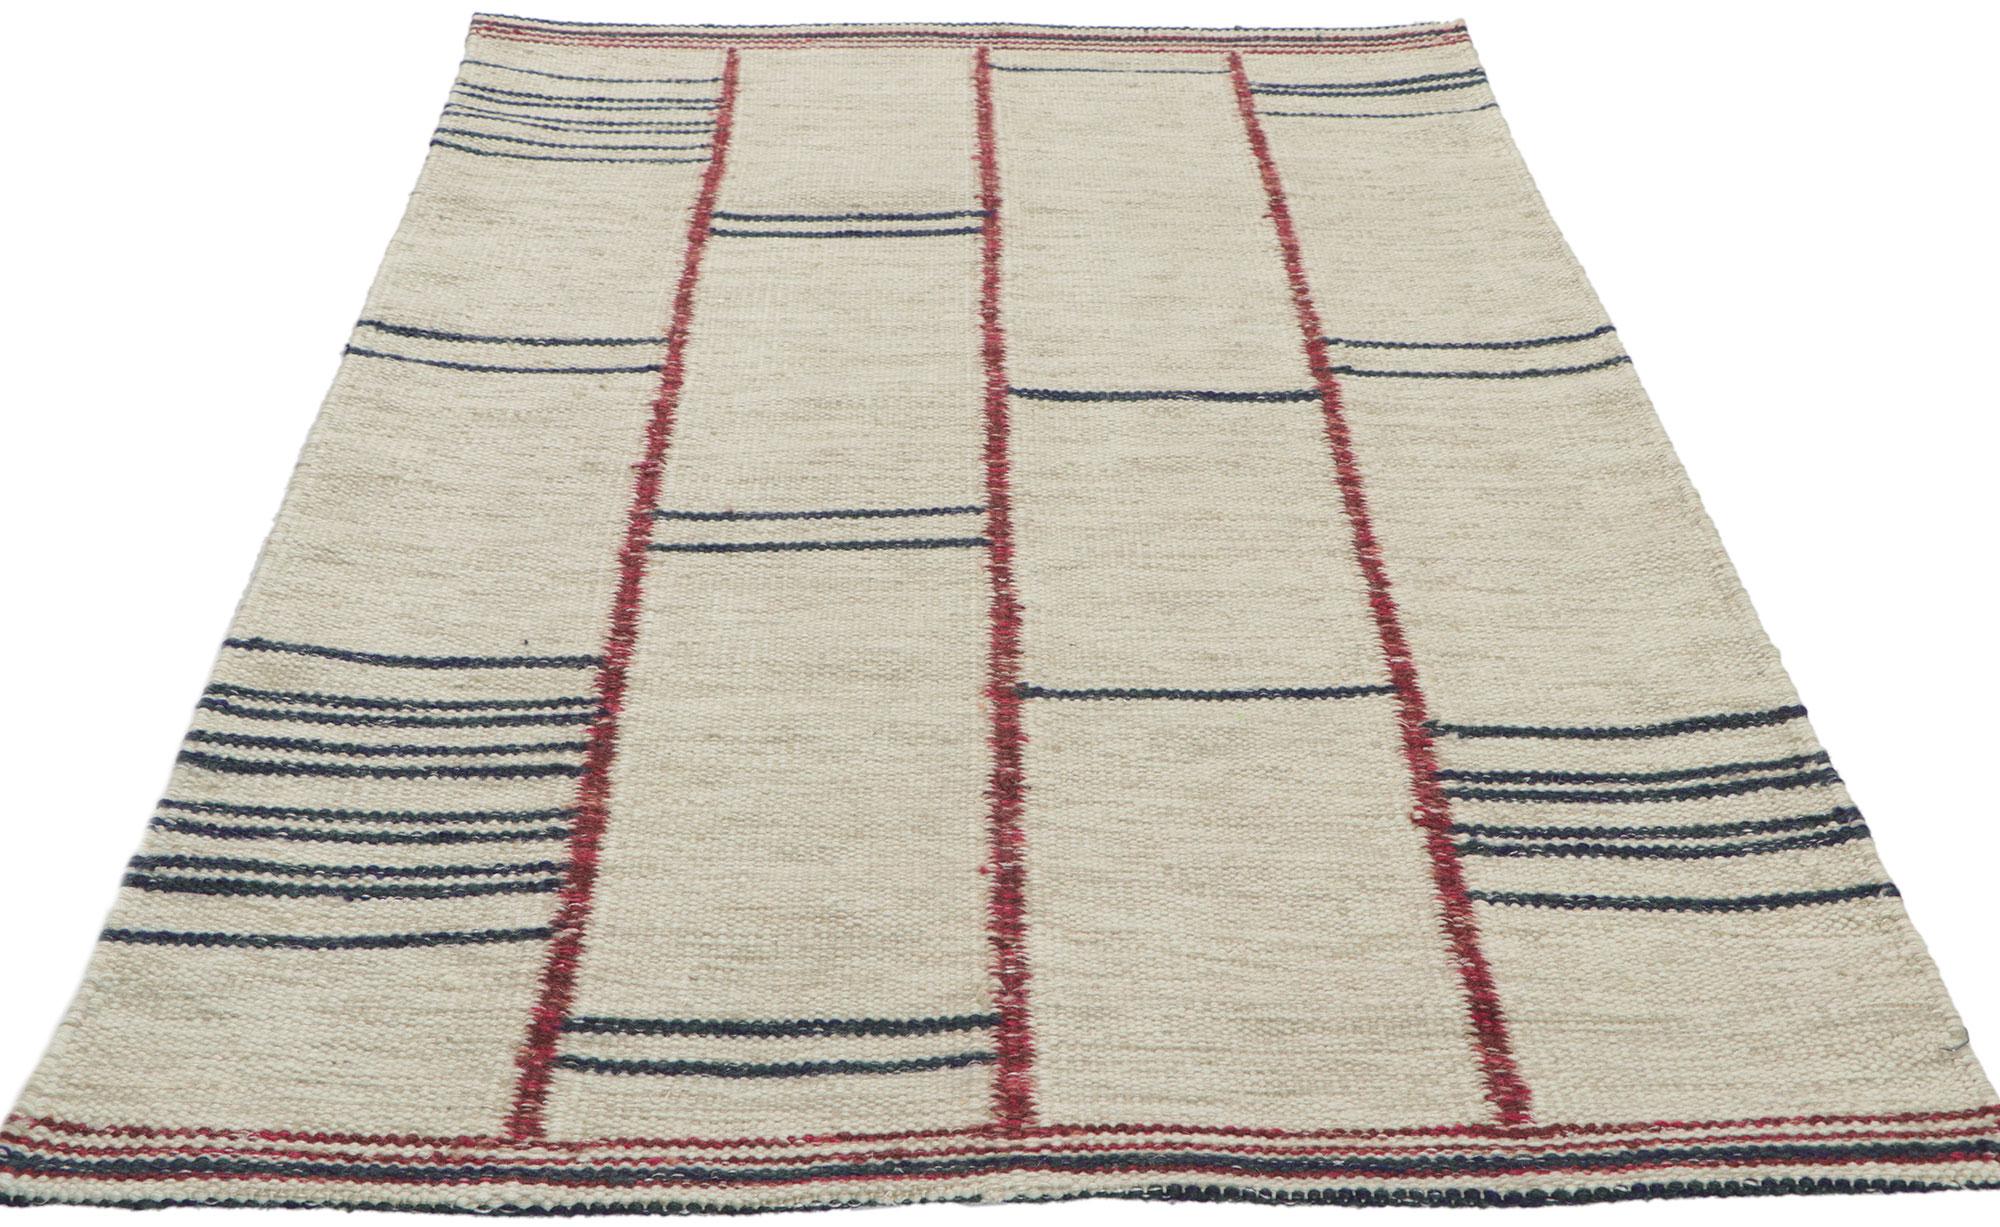 Indian Swedish Inspired Kilim Rug, Scandinavian Modern Meets Sublime Simplicity For Sale